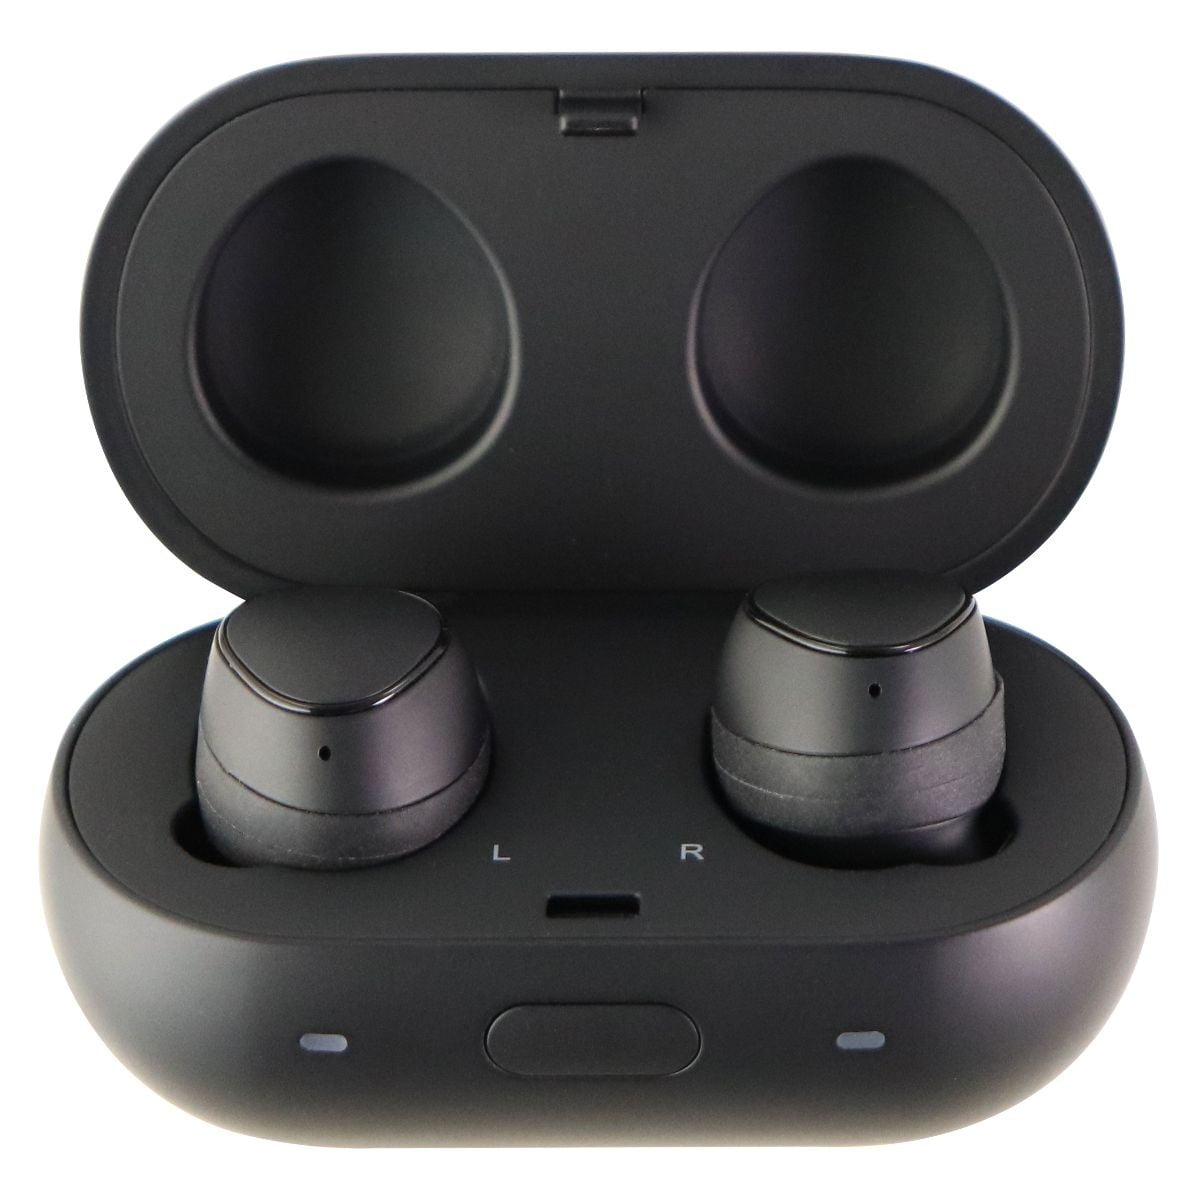 New Samsung Gear IconX SM-R140 Wireless Fitness Tracker Earbuds Headphones Black 